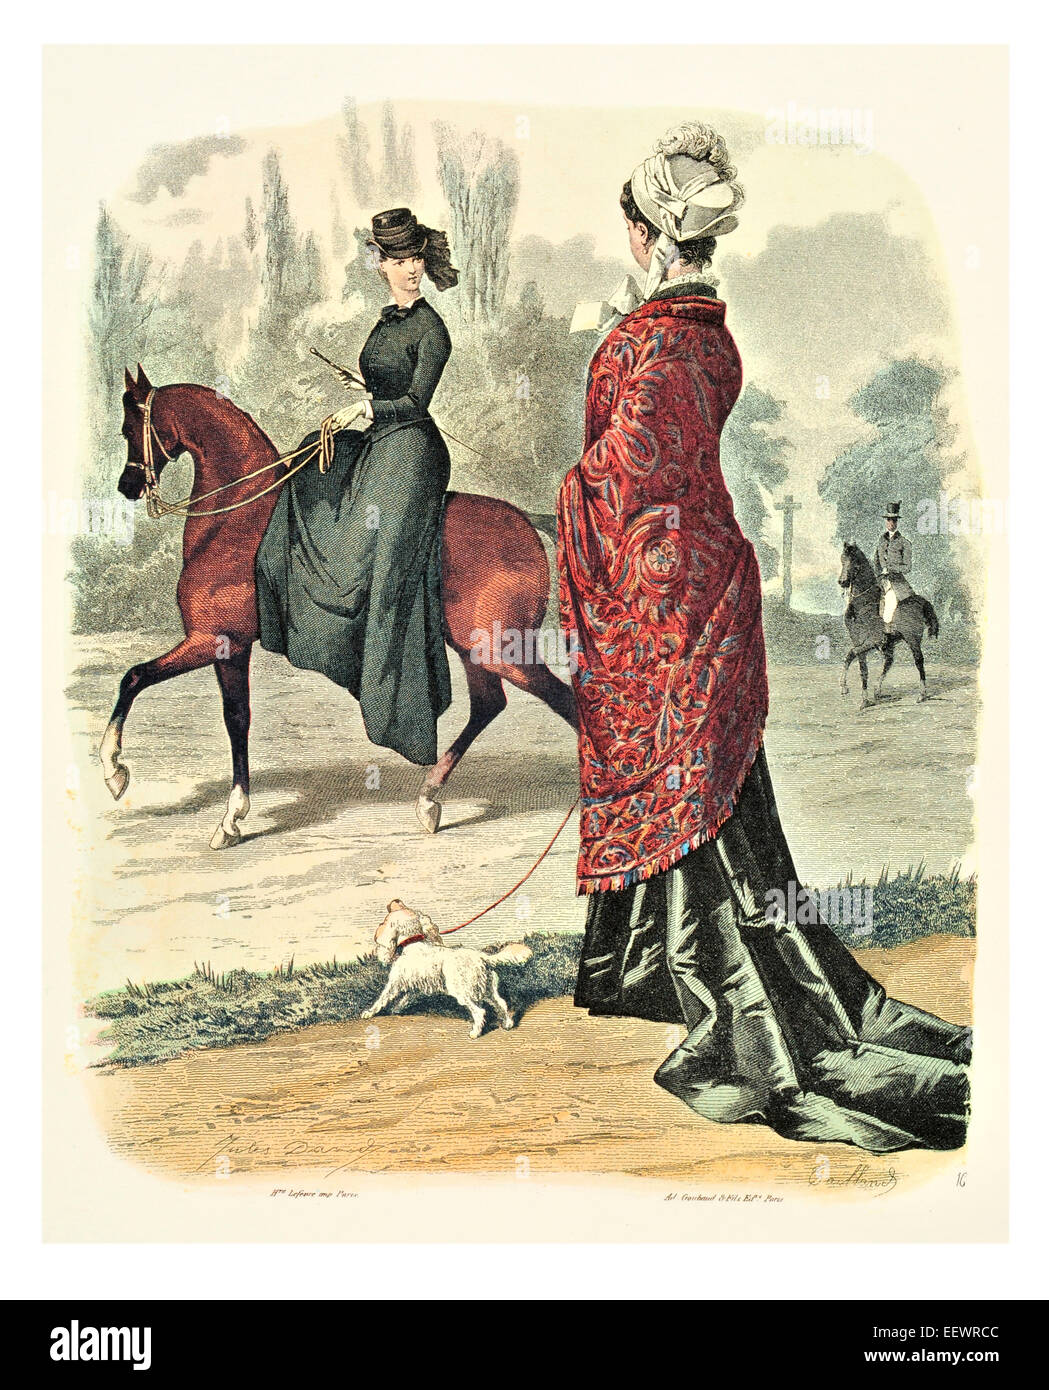 La Mode Illustree Victorian era period costume fashion dress gown gowns skirt veil cuff frills muslin cap riding equine Stock Photo